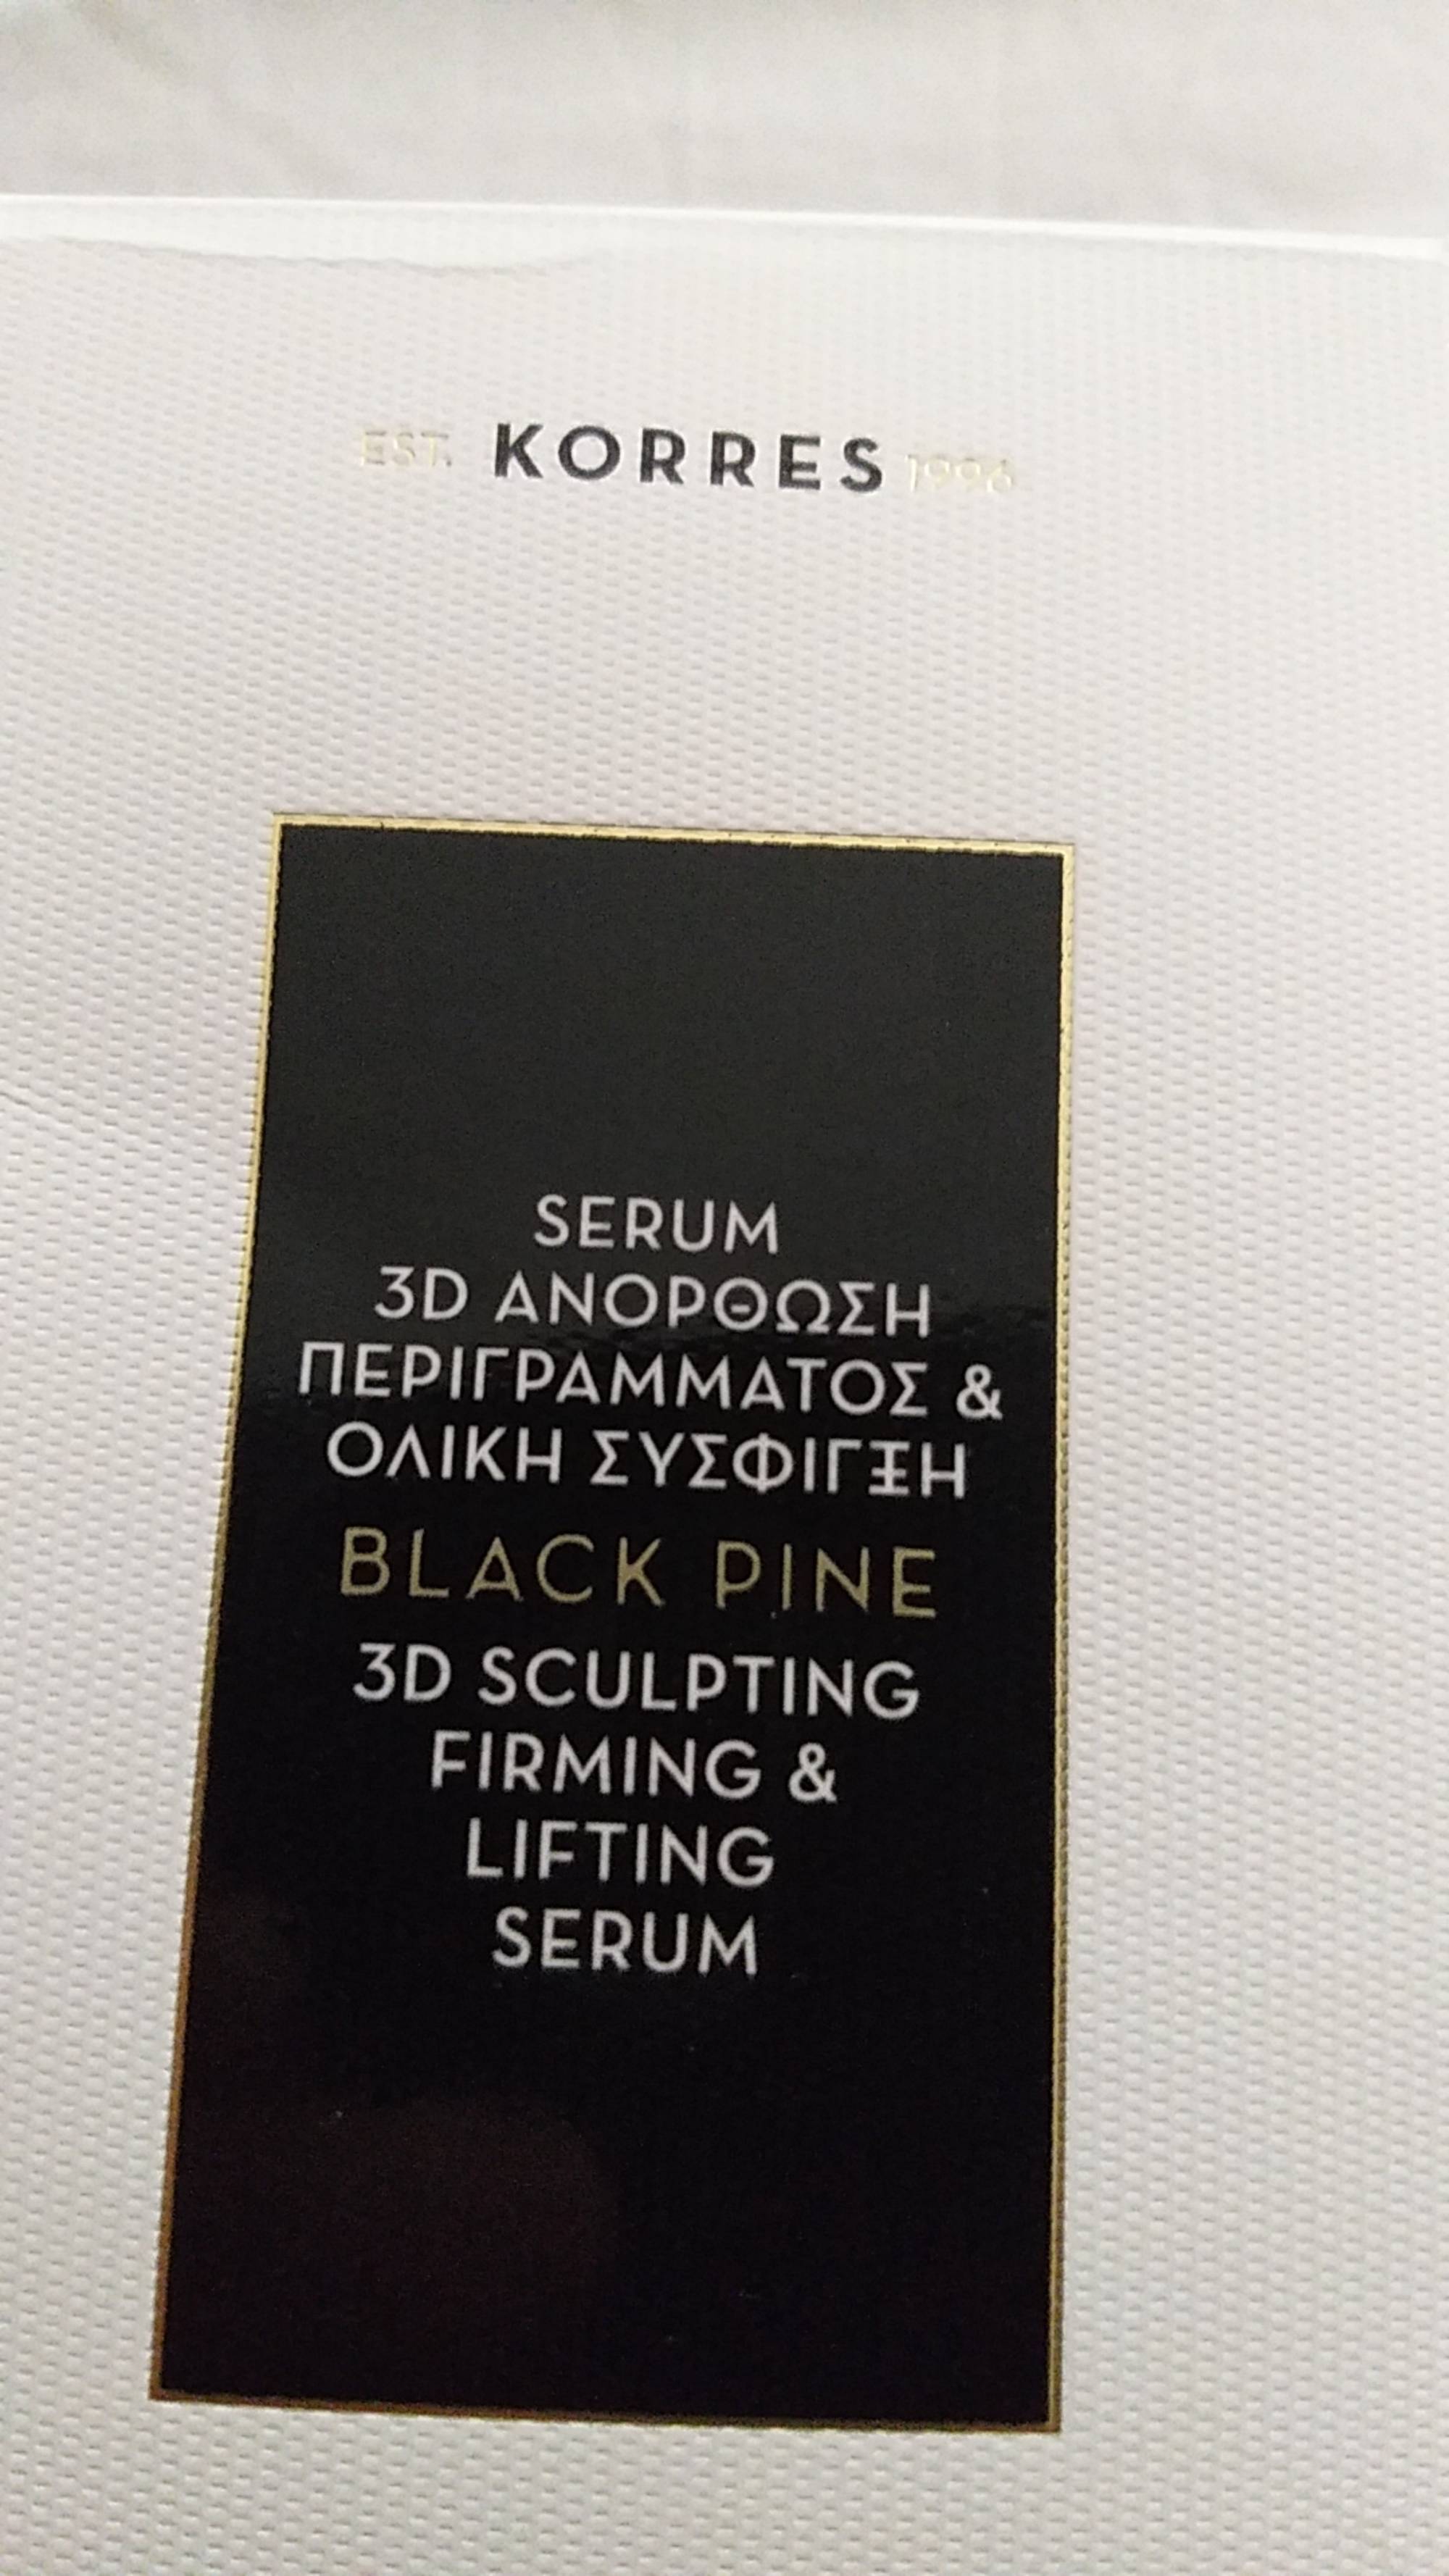 KORRES - Black pine - 3D sculpting firming & lifting serum